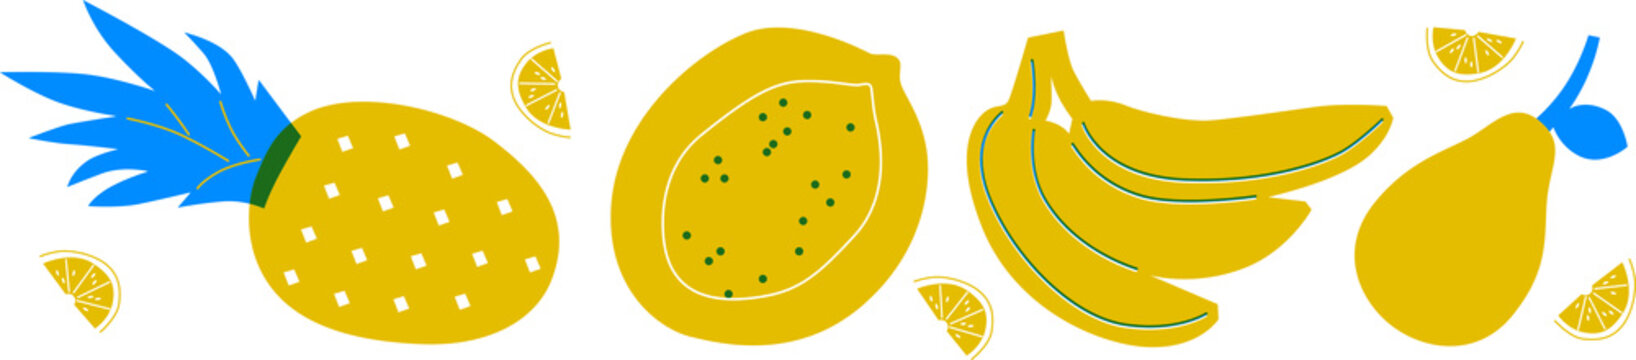 Fruits abstract vector. Pineapple, banana, pear, papaya simple illustration. Exotic fruits horizontal banner cartoon flat style. Can be use for restaurants menu, cover, packaging.